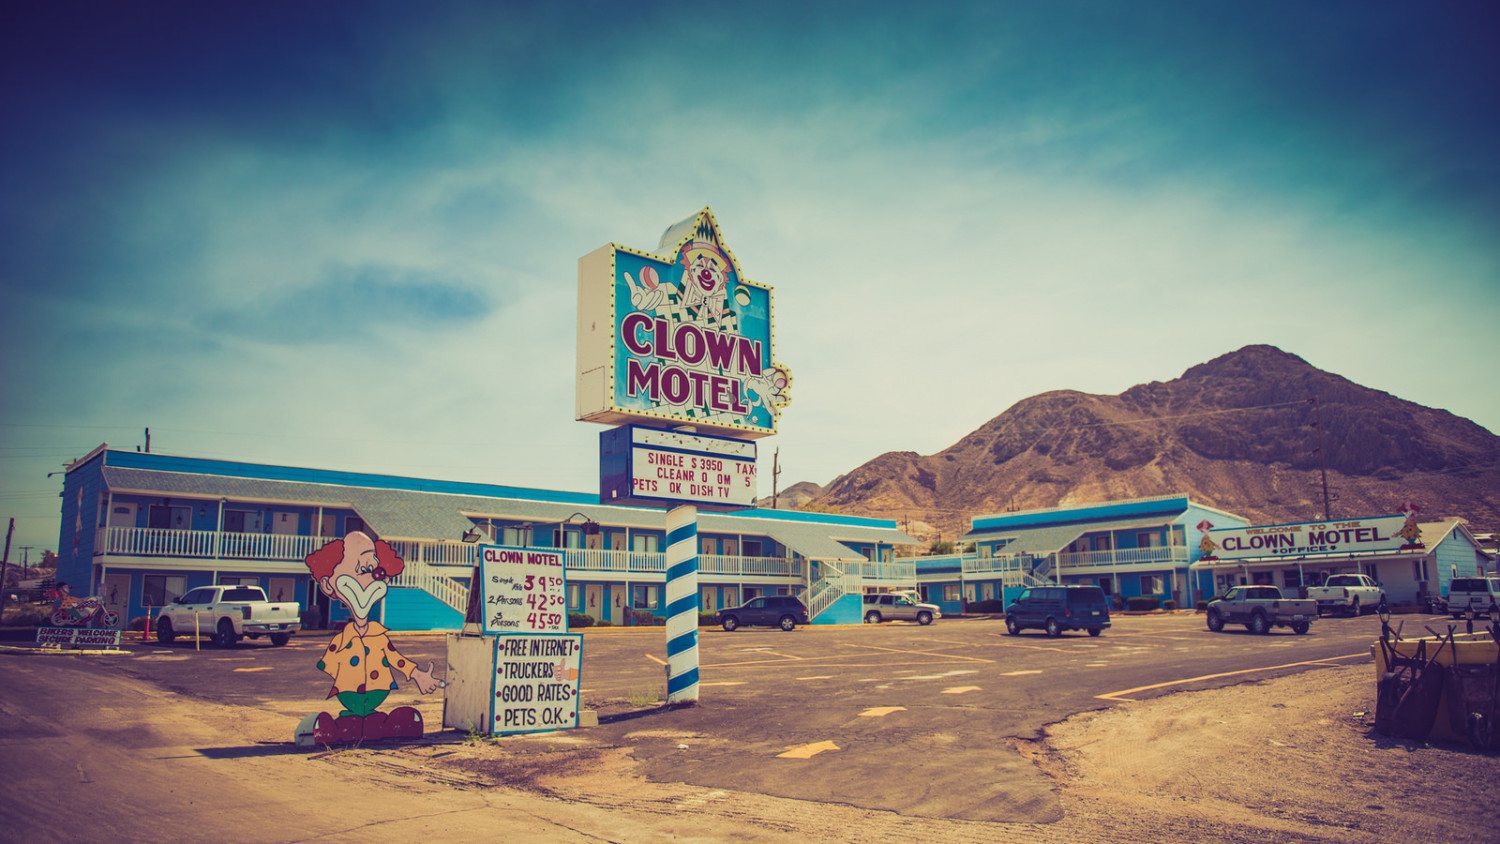 The Clown Motel in Tonopah, Nevada